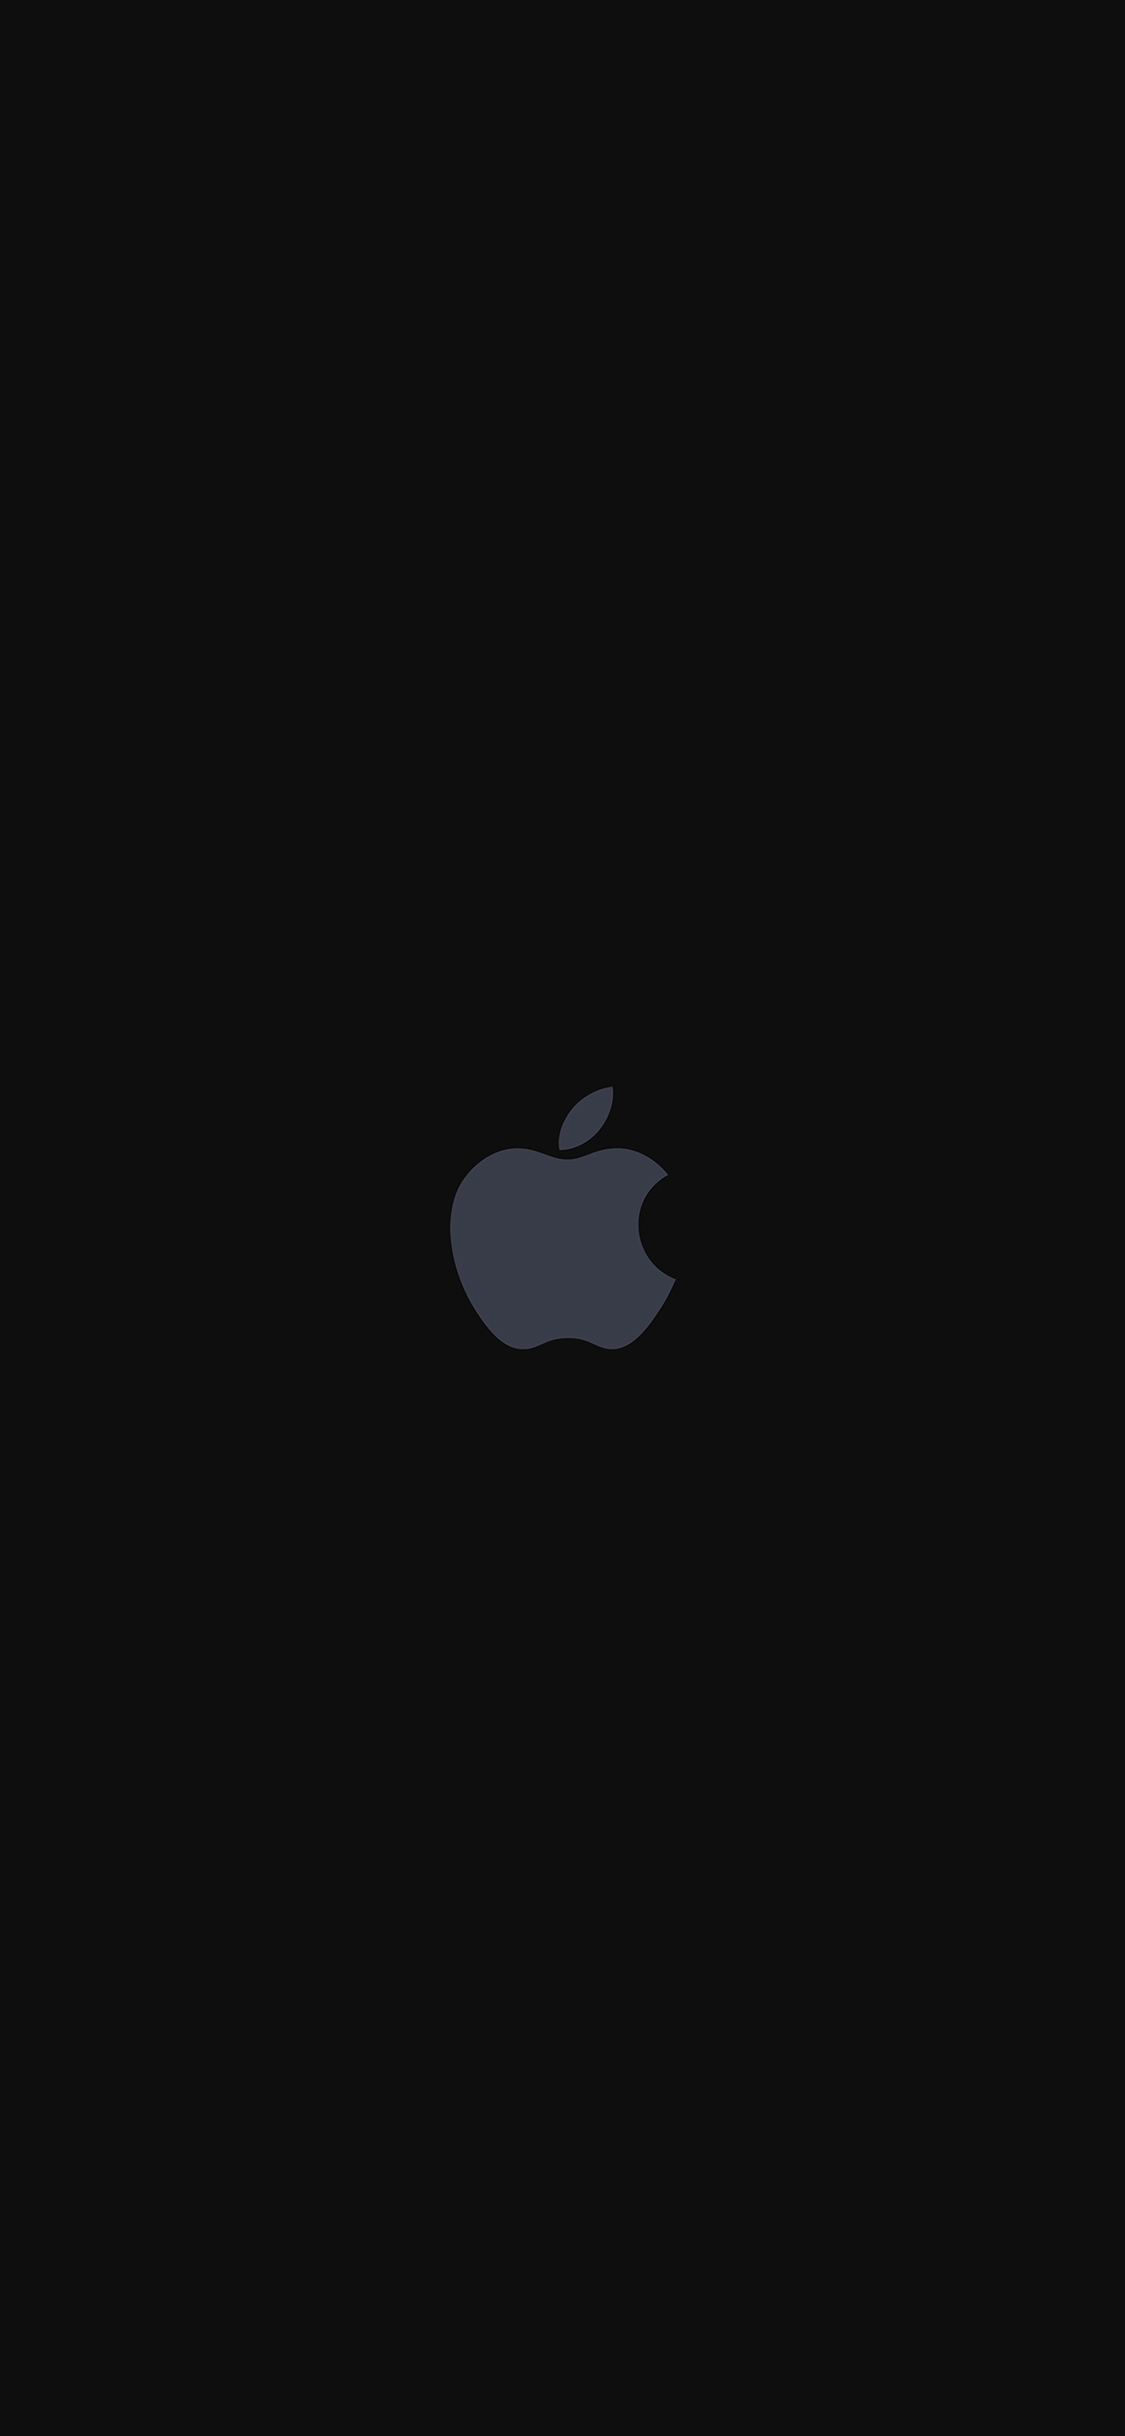 iphone logo wallpaper,black,white,sky,darkness,text